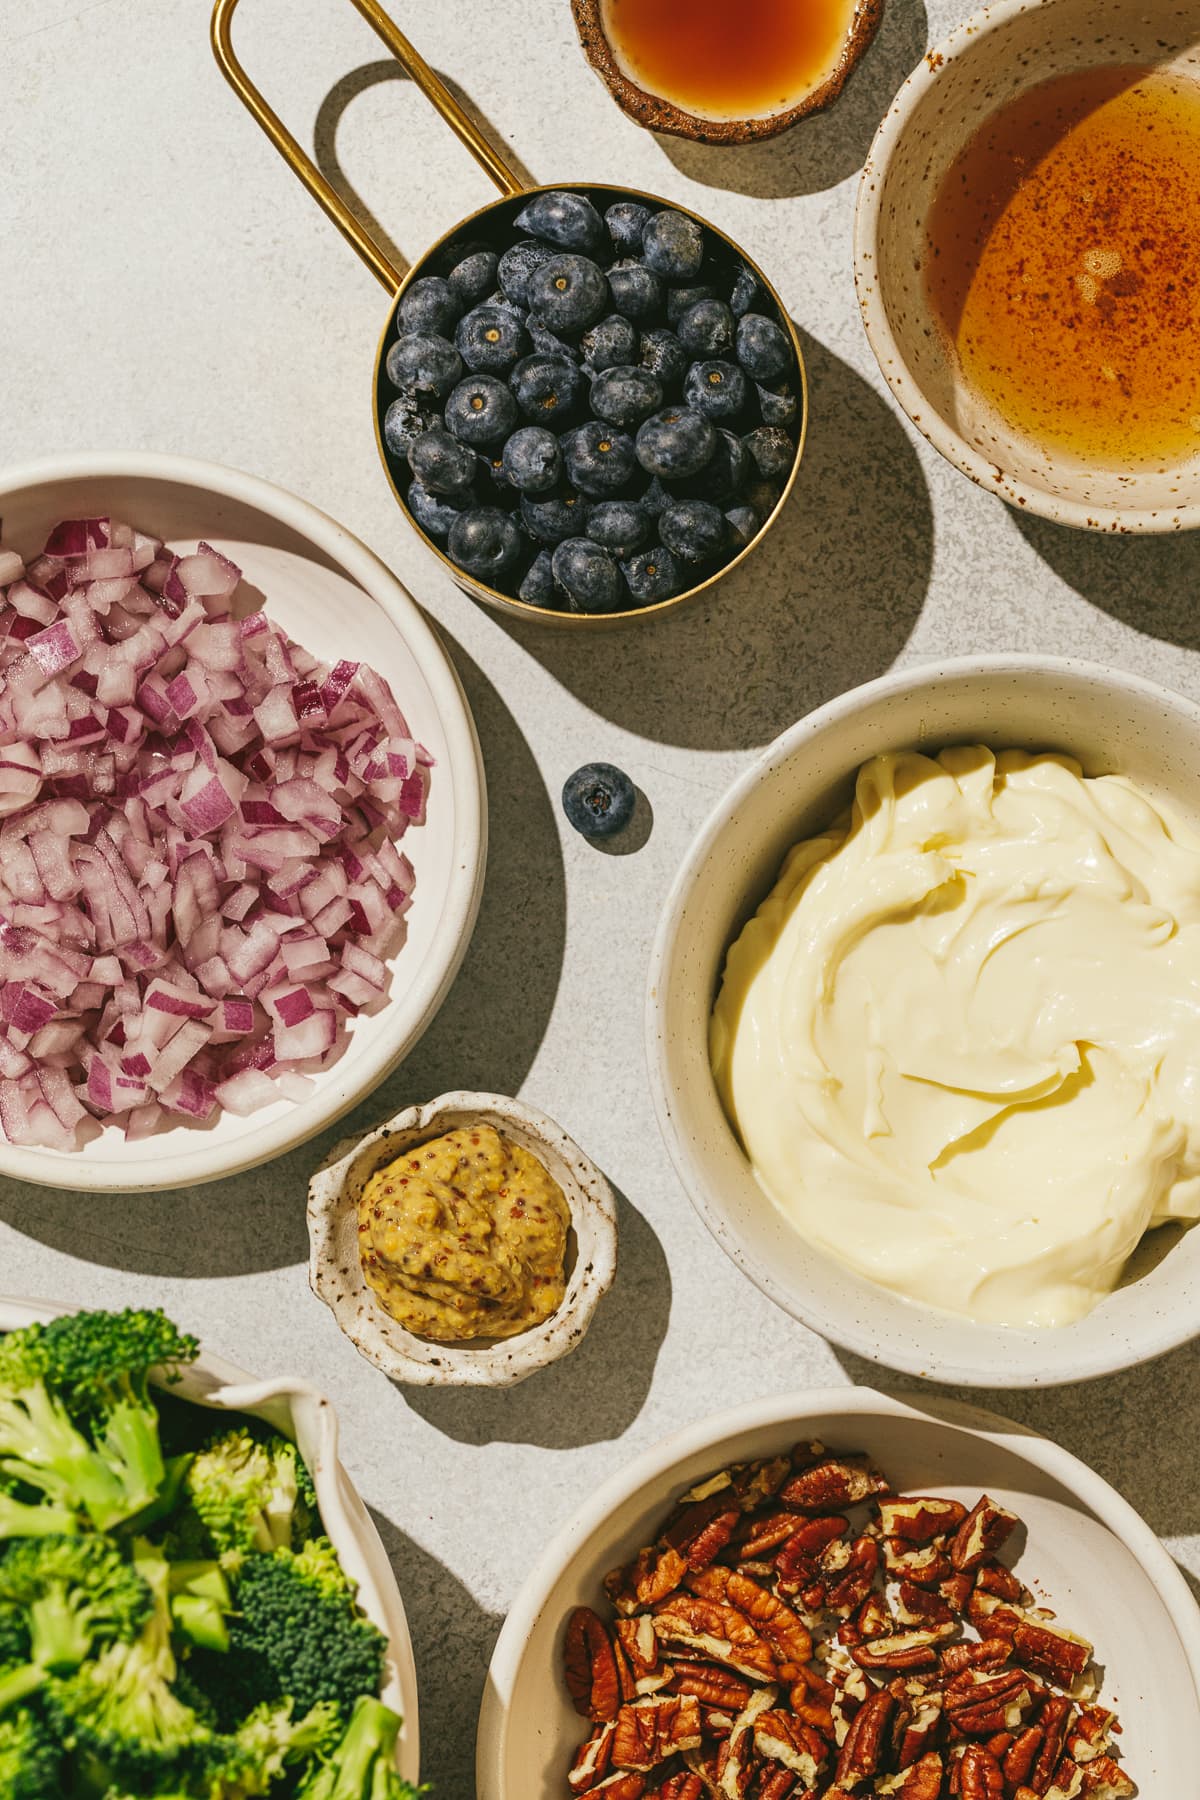 Ingredients for broccoli crunch salad recipe.